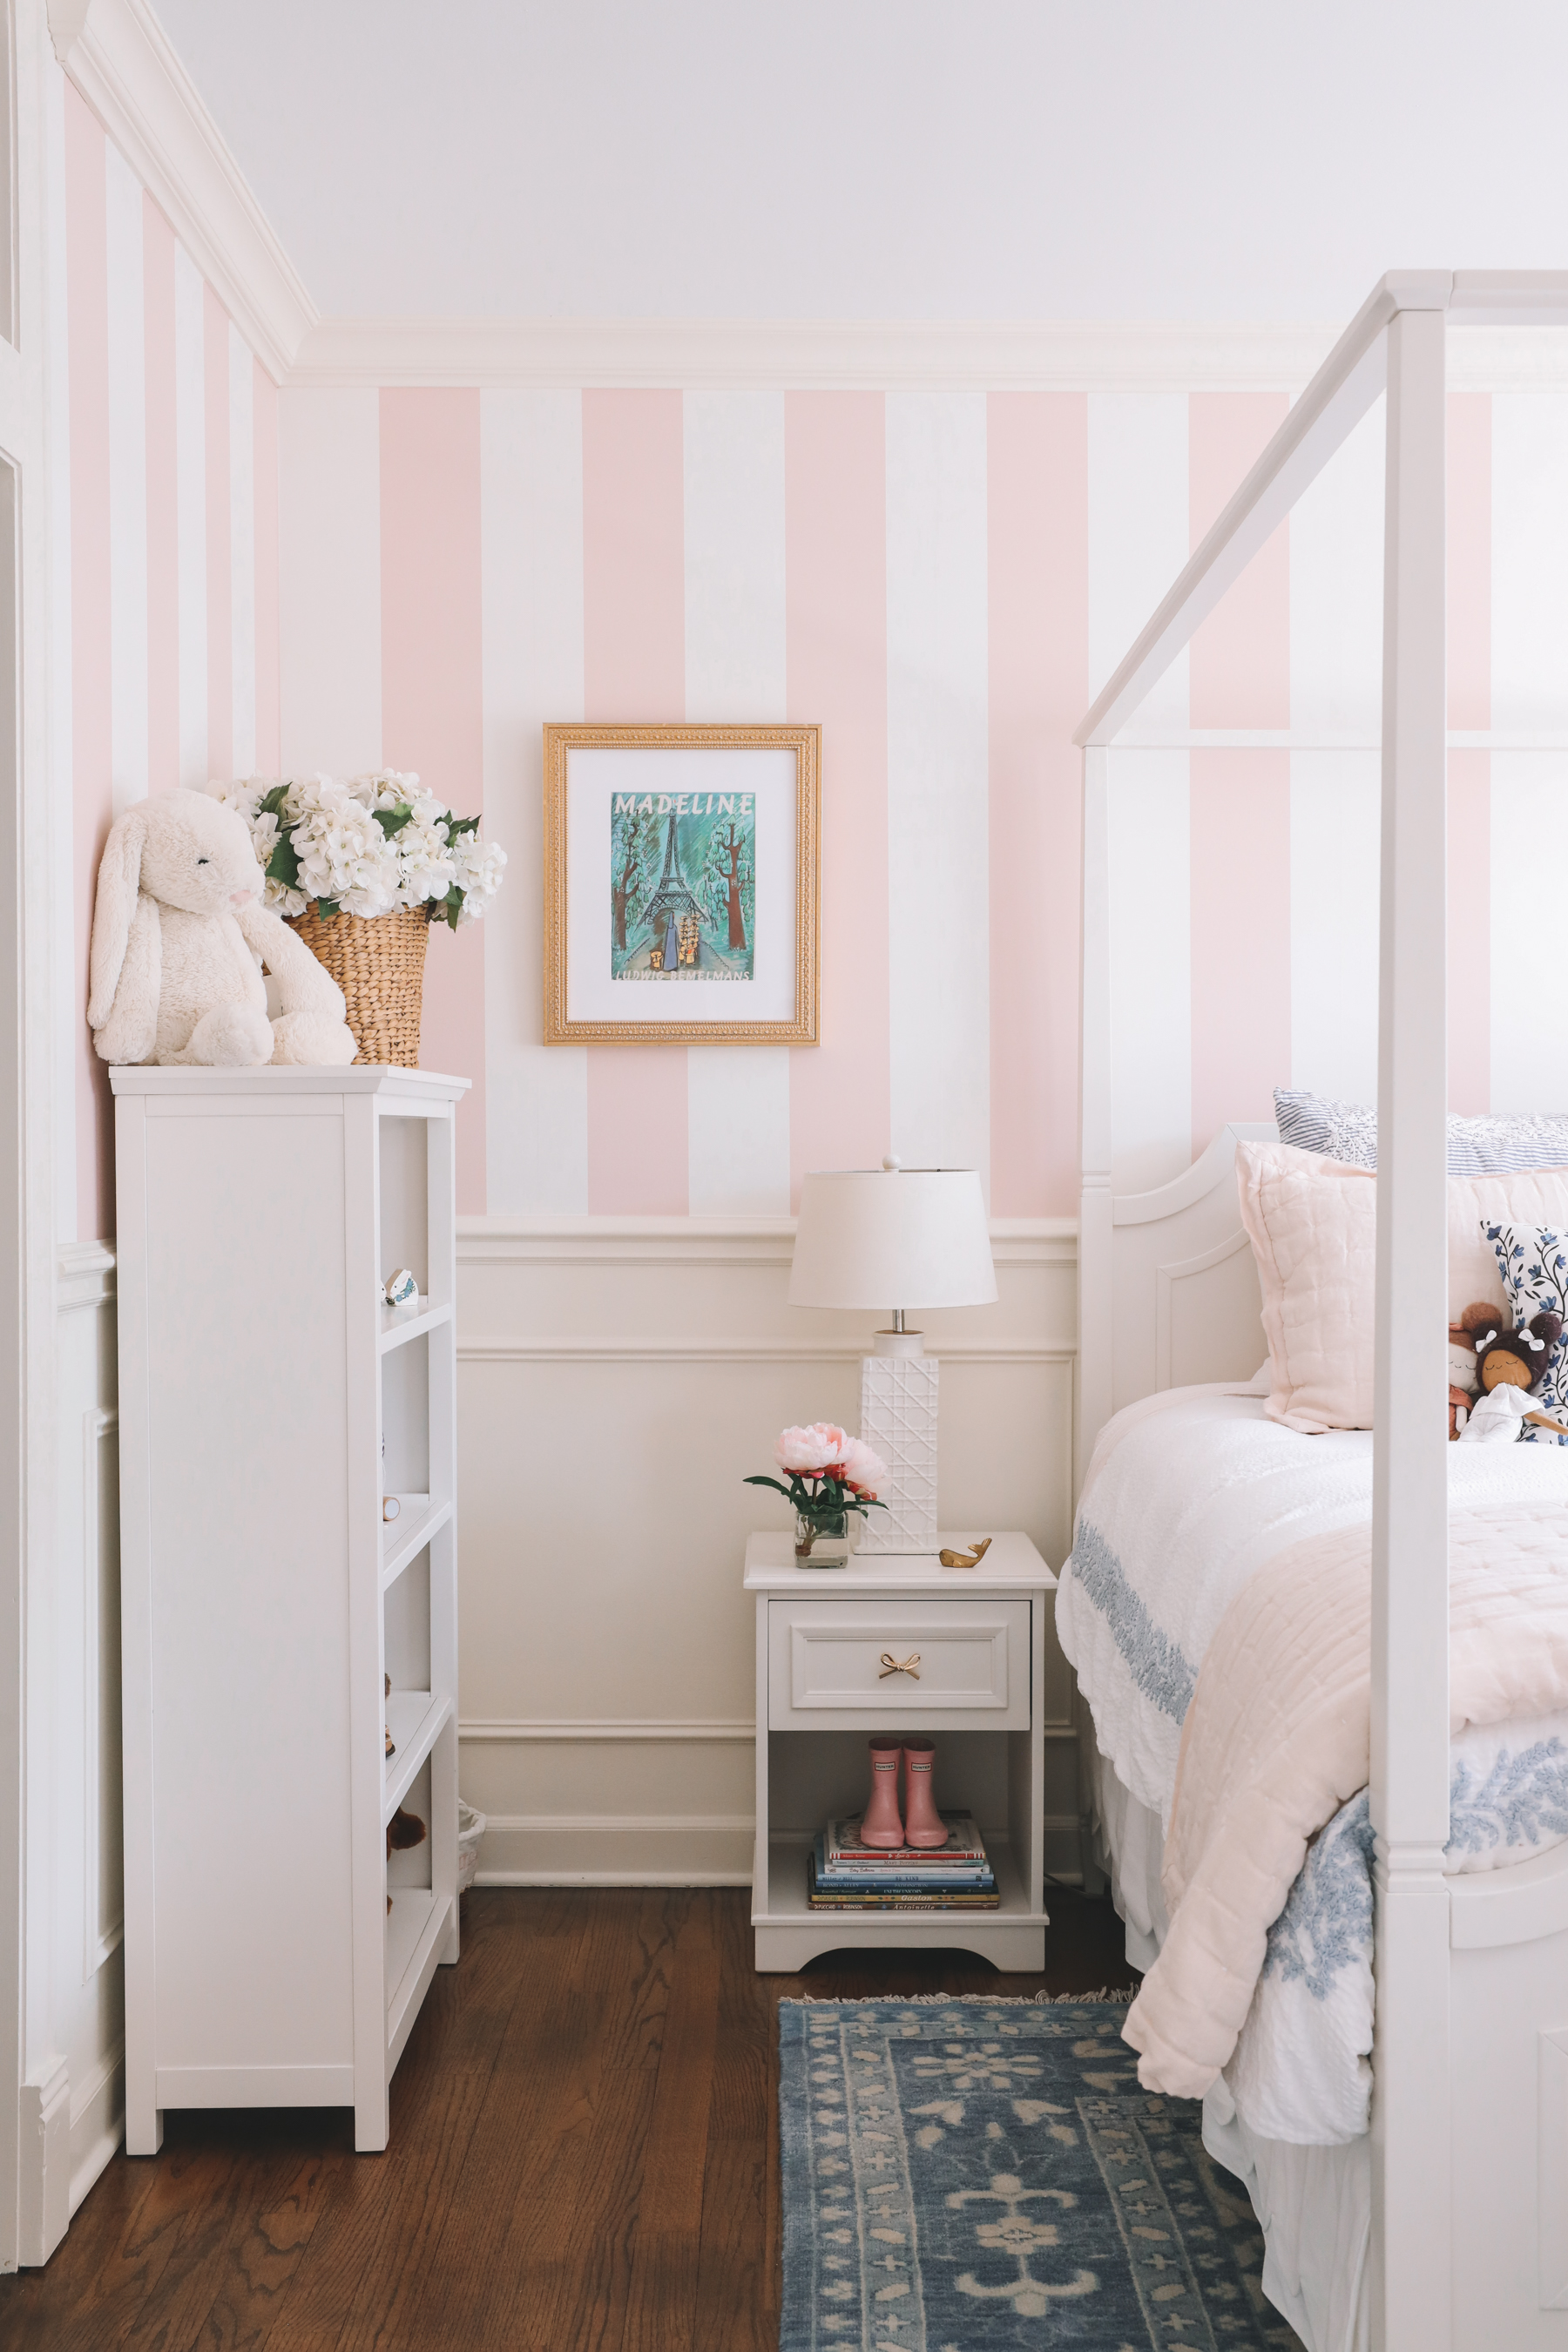 Beatrix Potter Nursery Fabric, Wallpaper and Home Decor